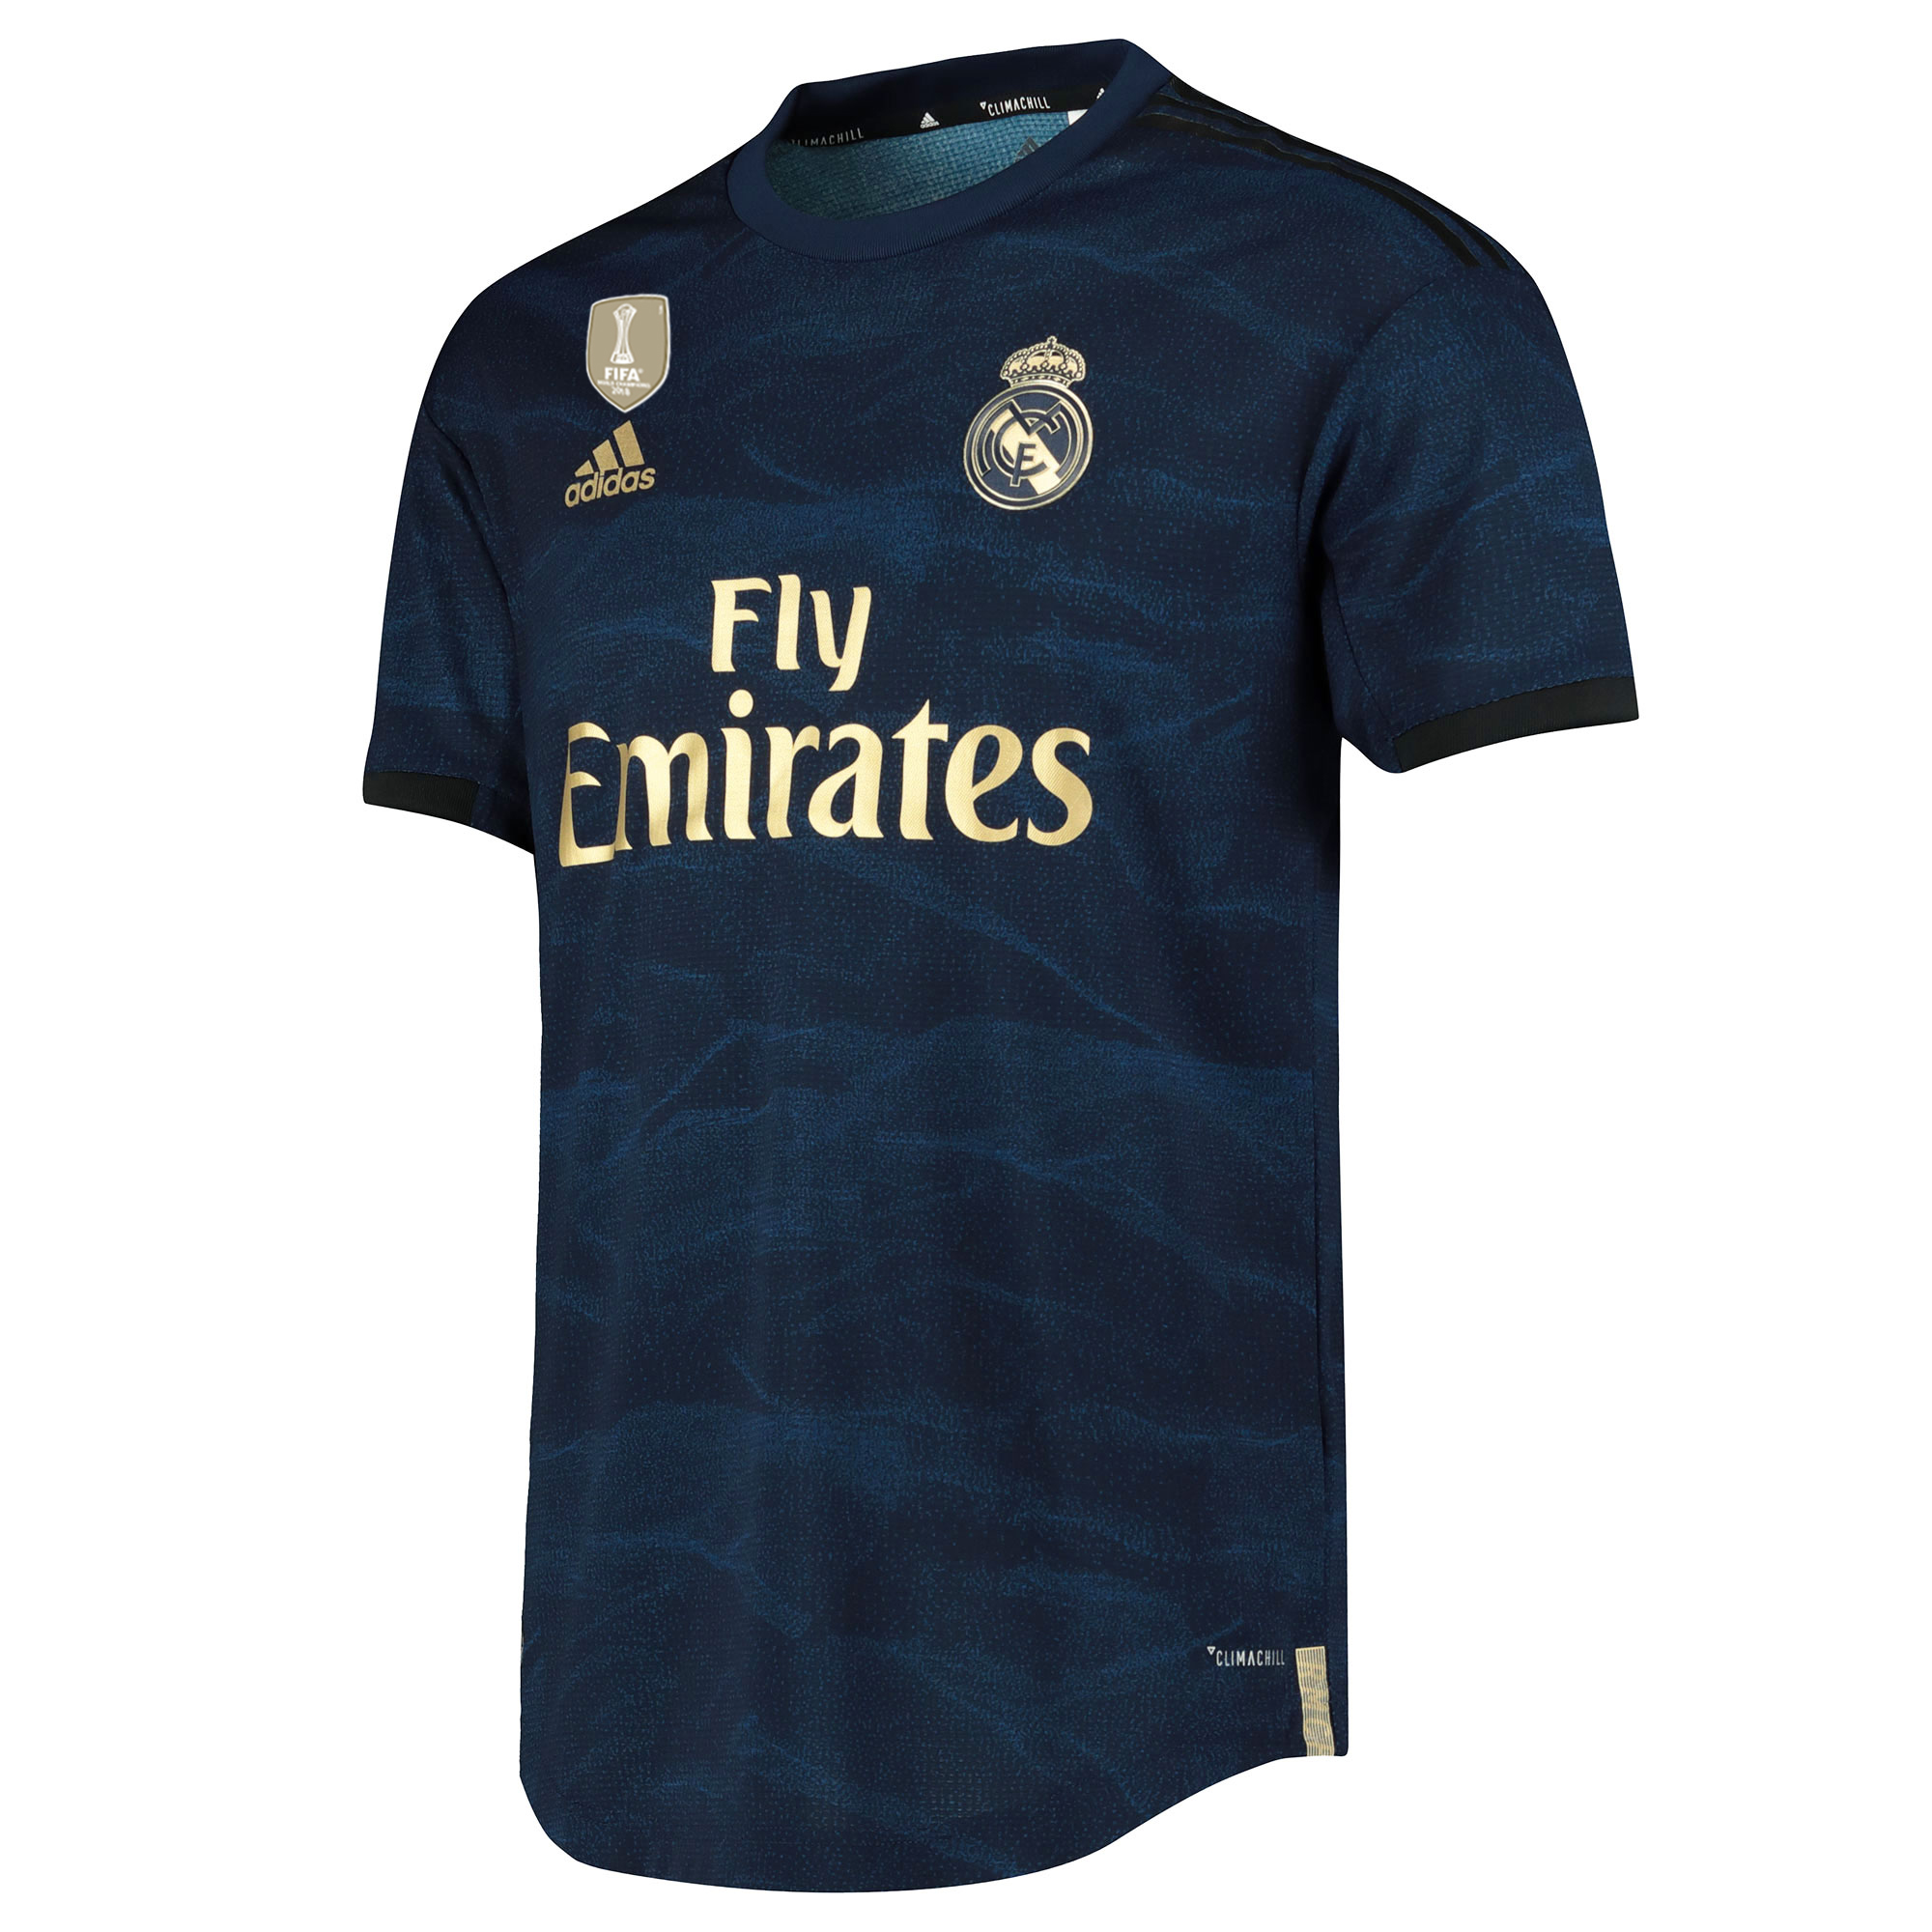 Real Madrid 19-20 Away Kit Released 